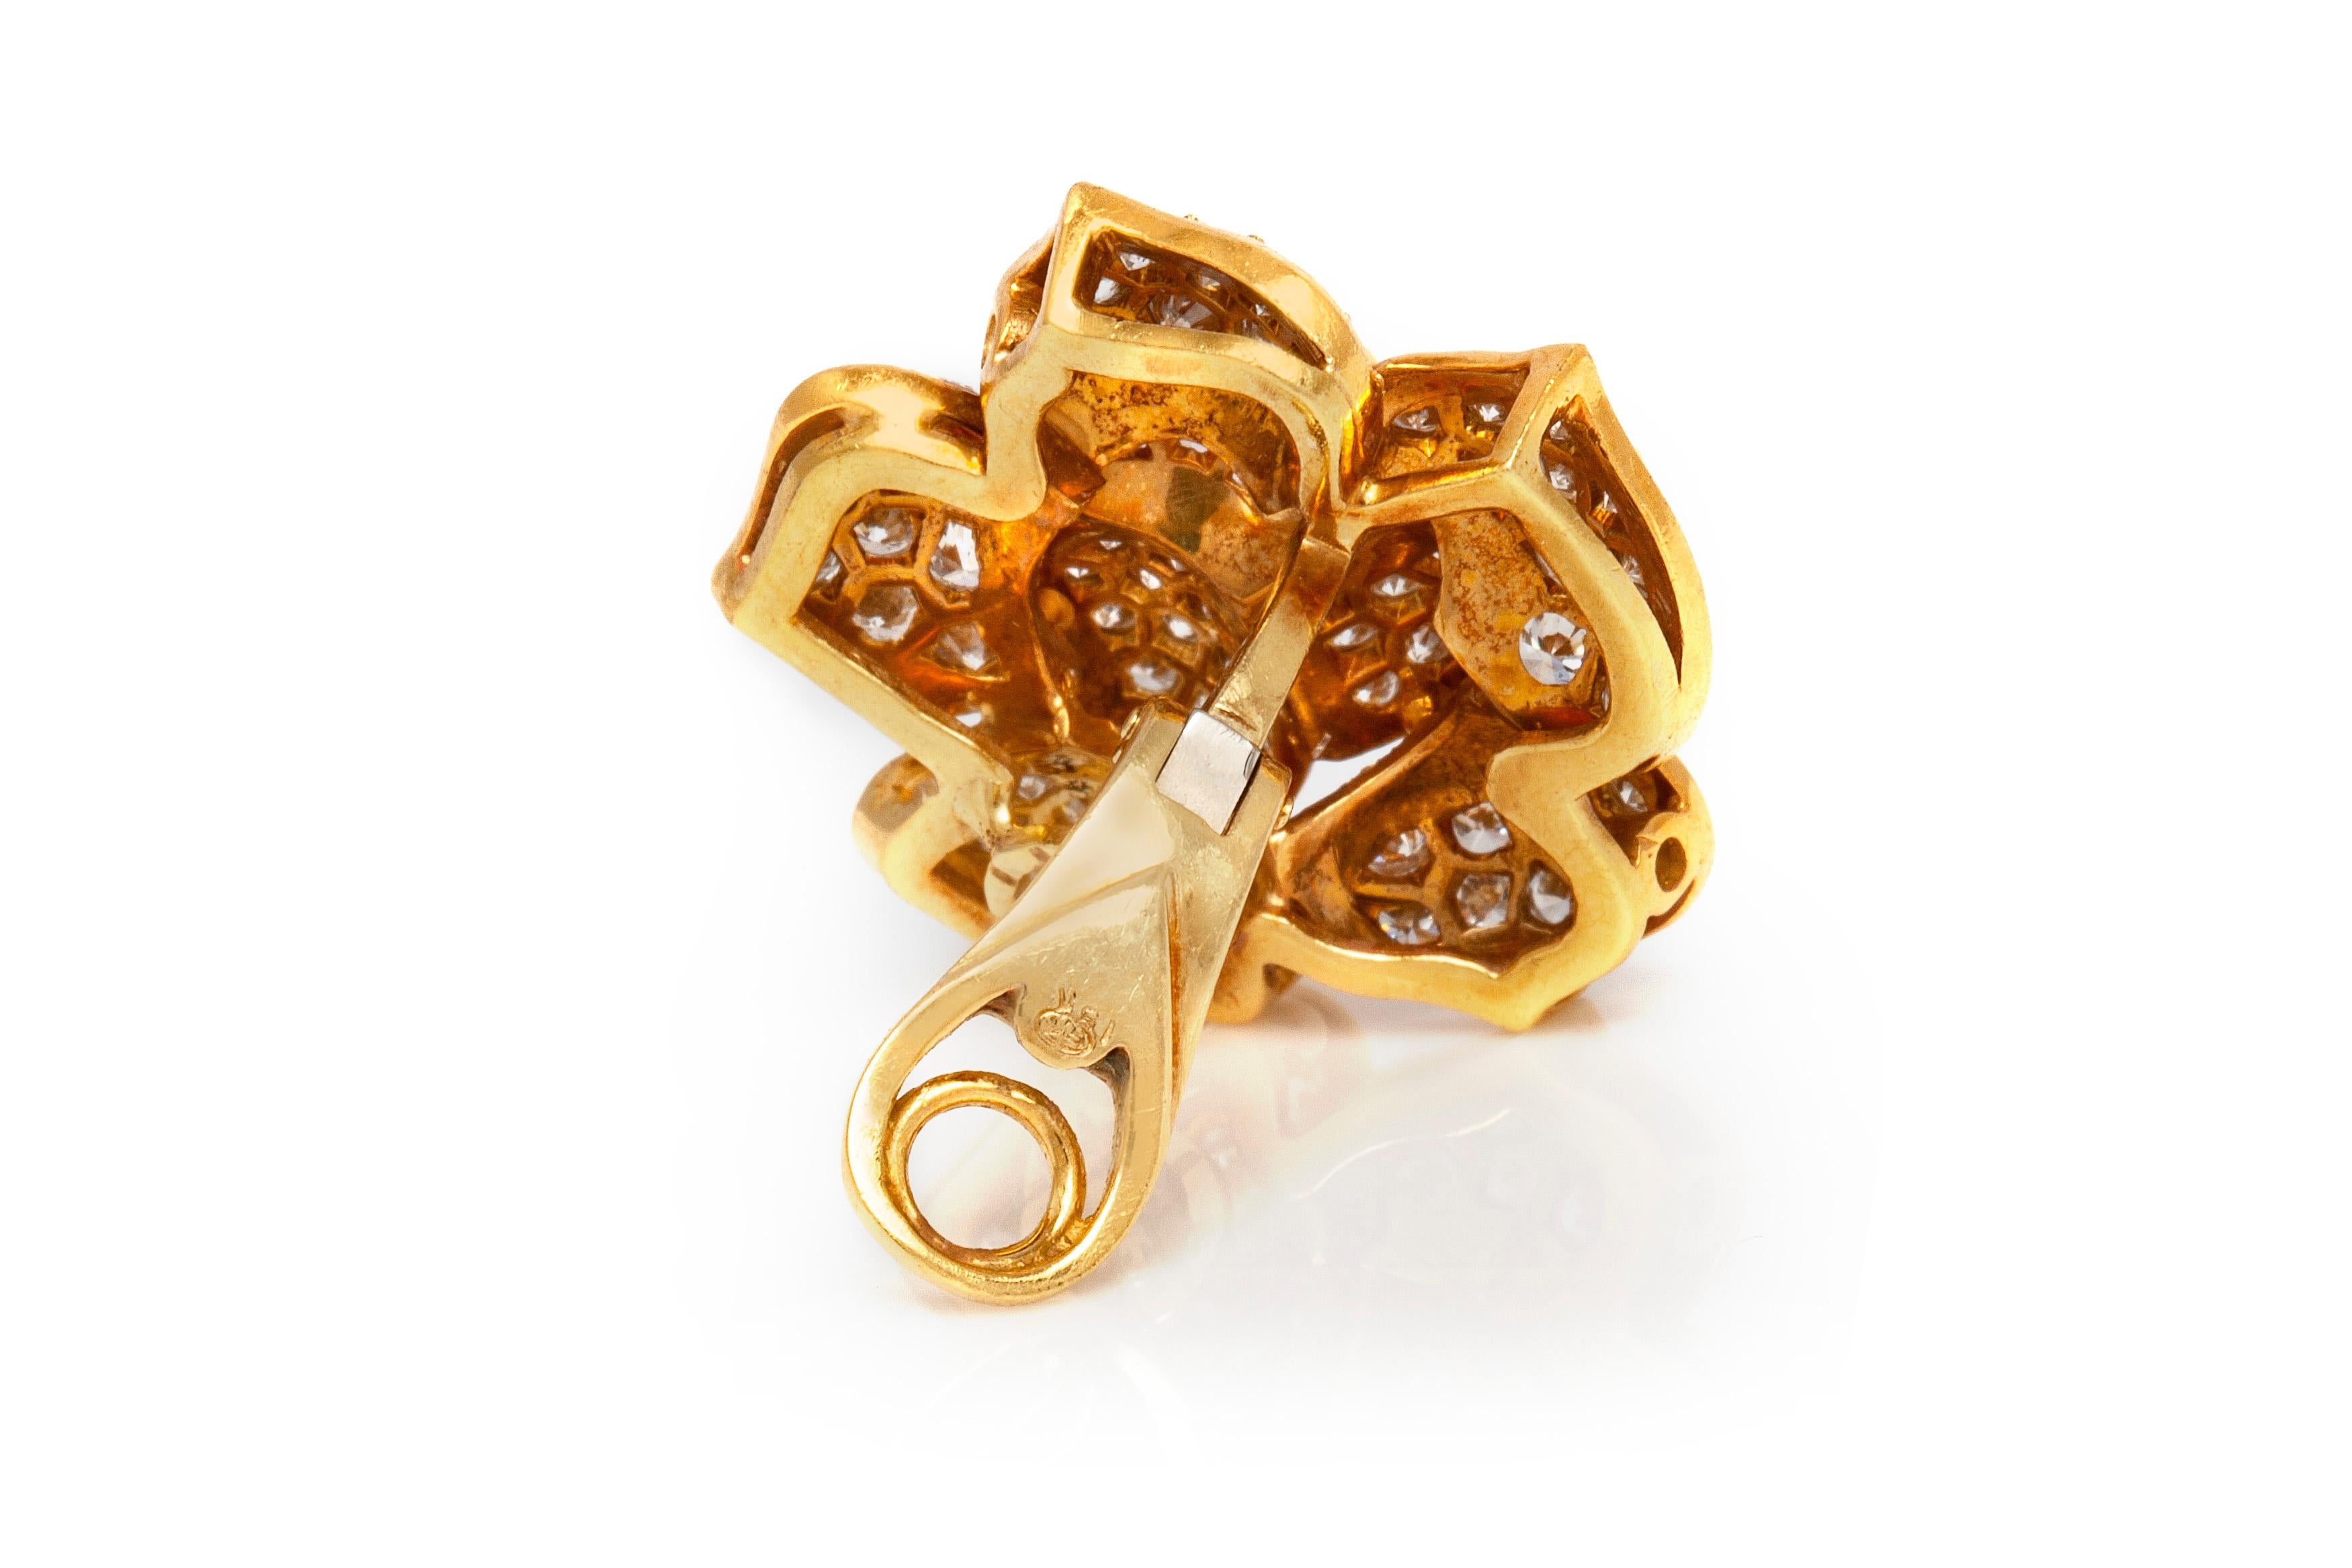 10 carat diamond earrings